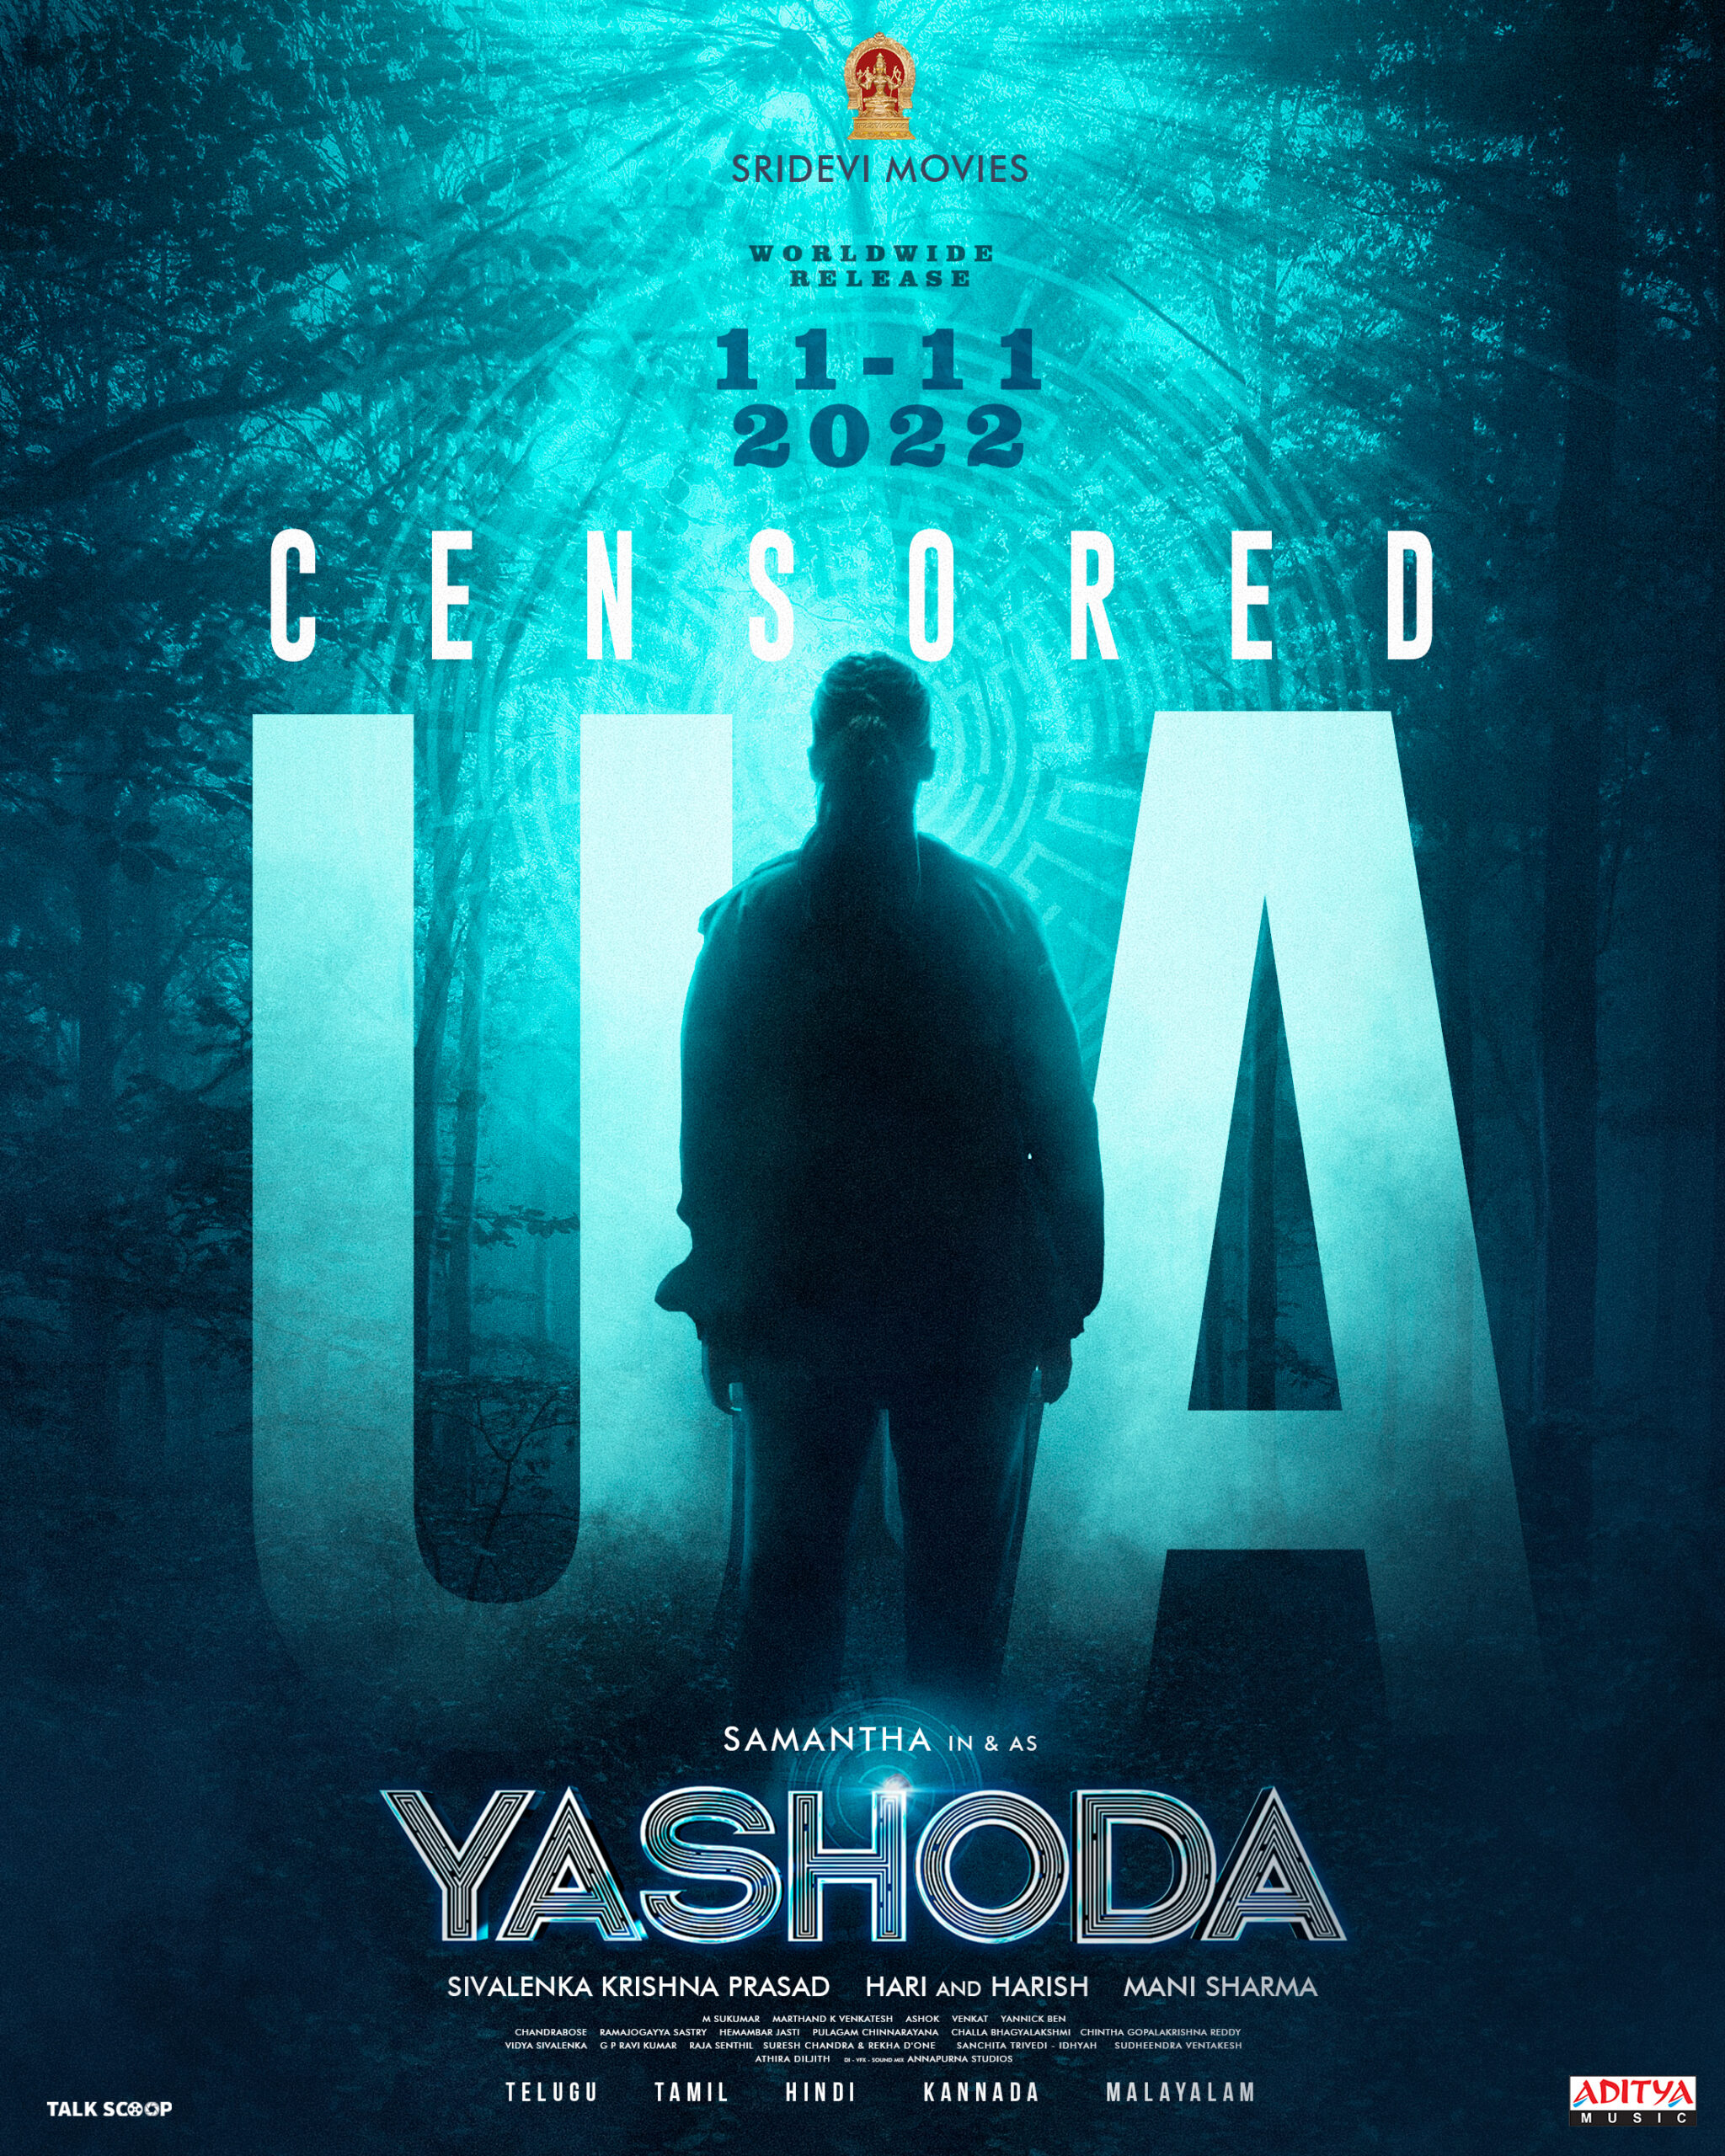 Samantha’s Edge-of-the-seat Action Thriller ‘Yashoda’ gets censored!!